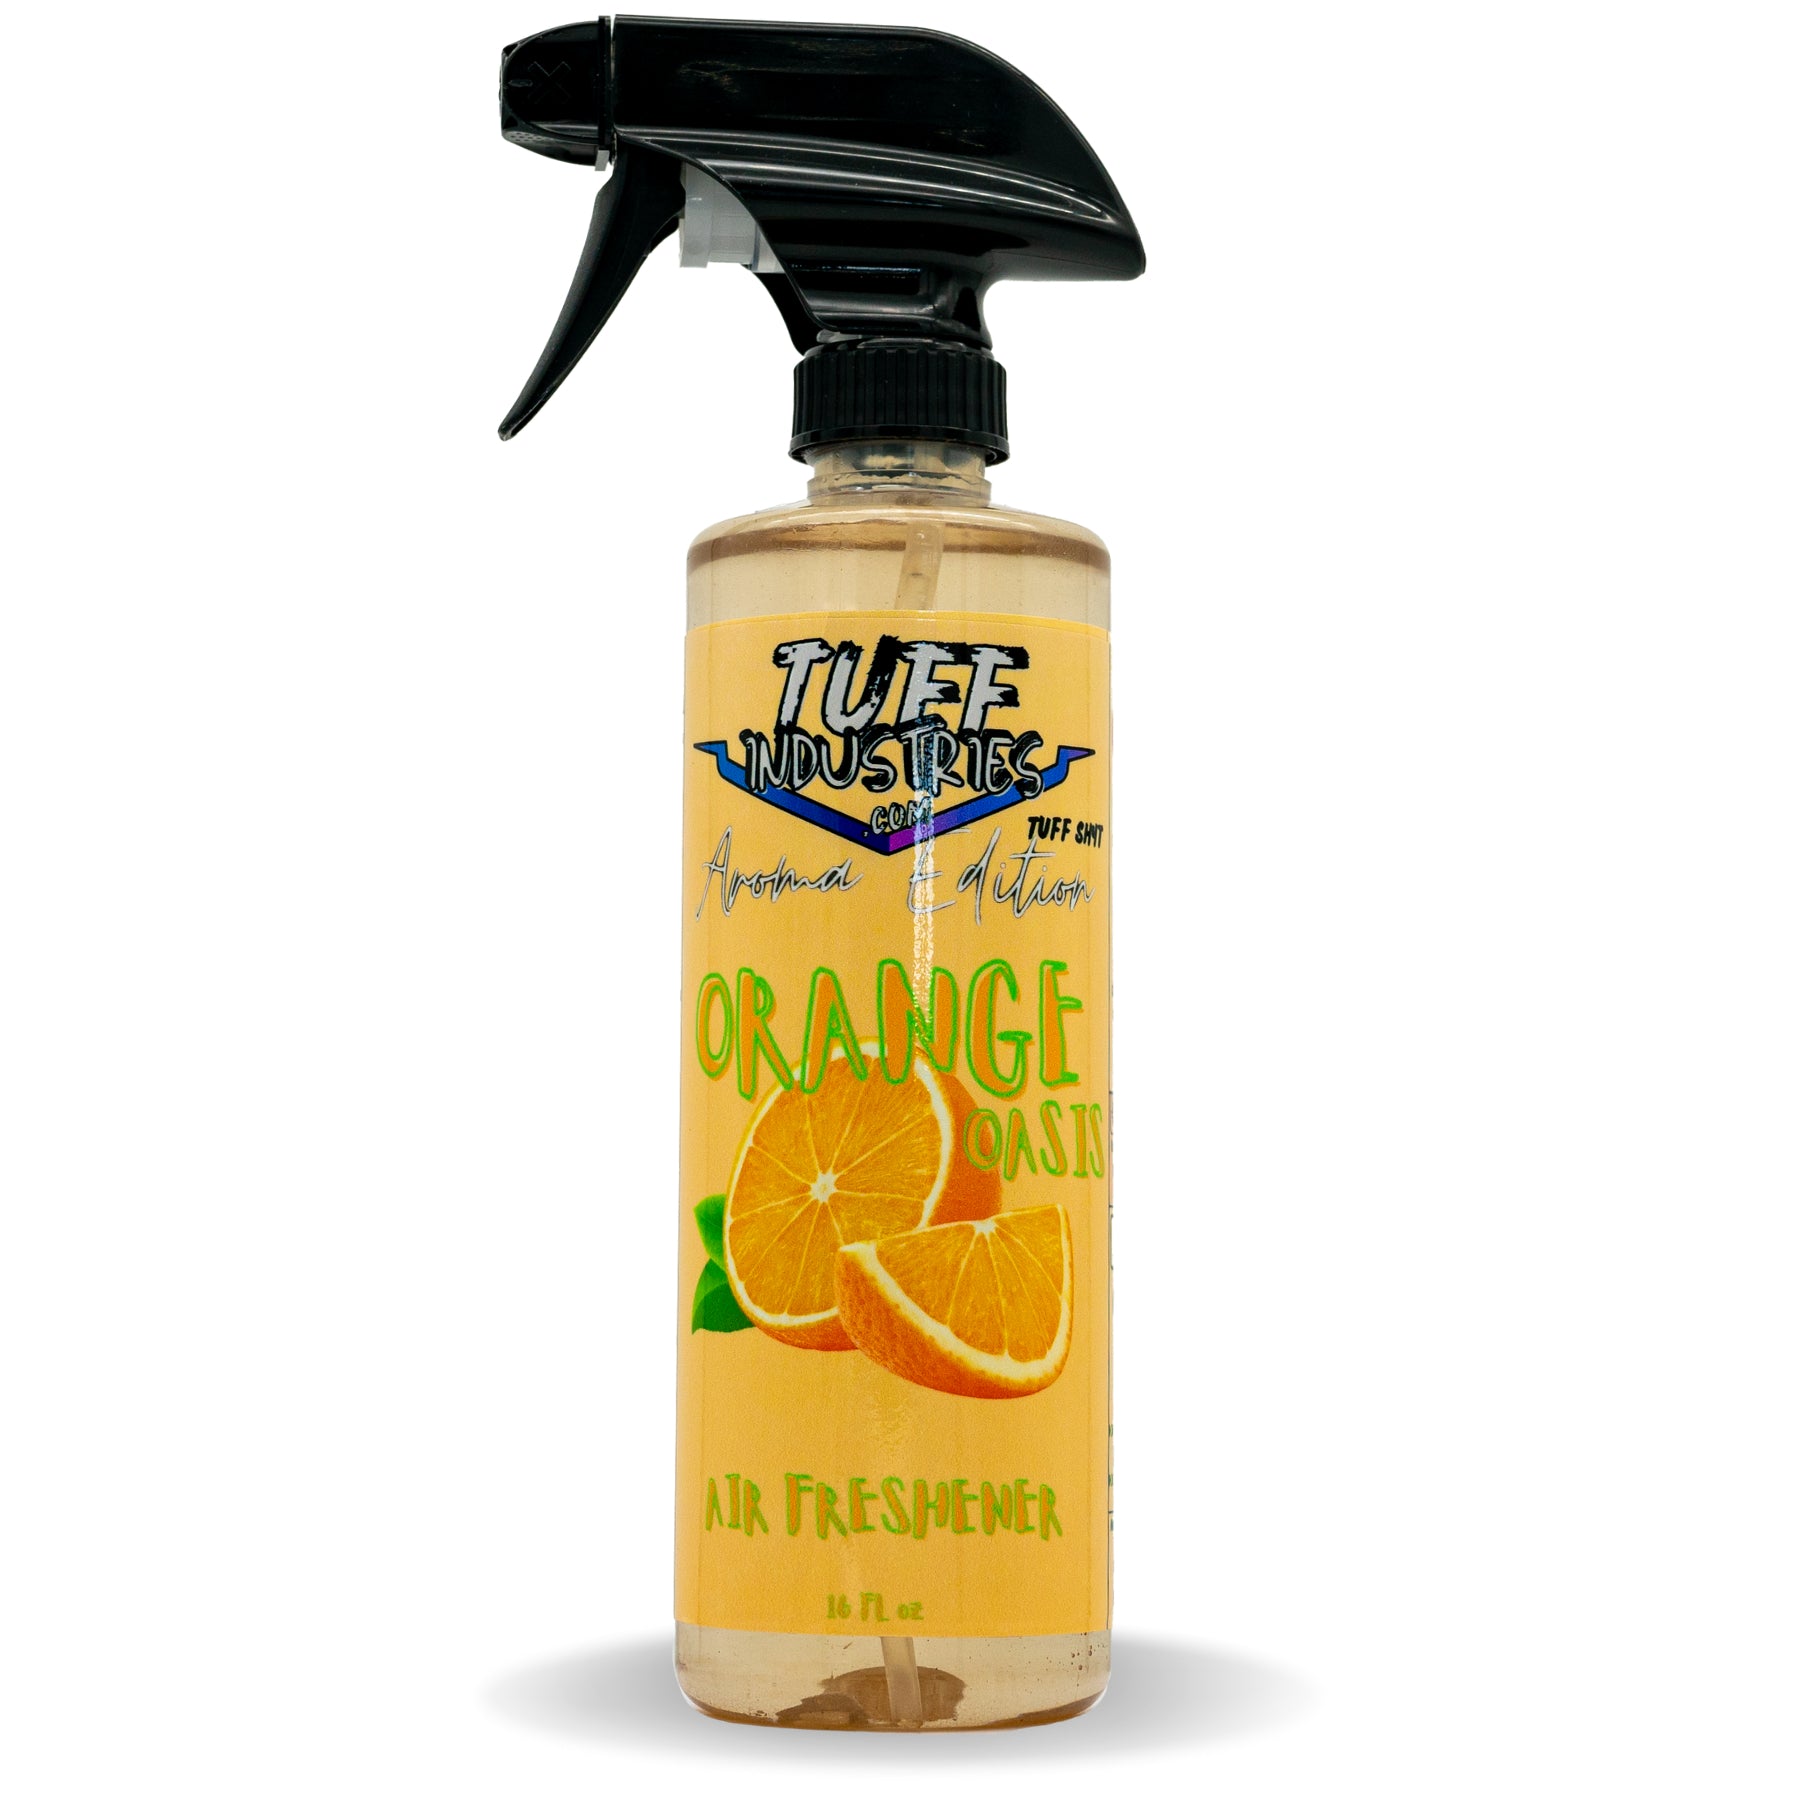 Orange Oasis - Air Freshener-Tuff Industries